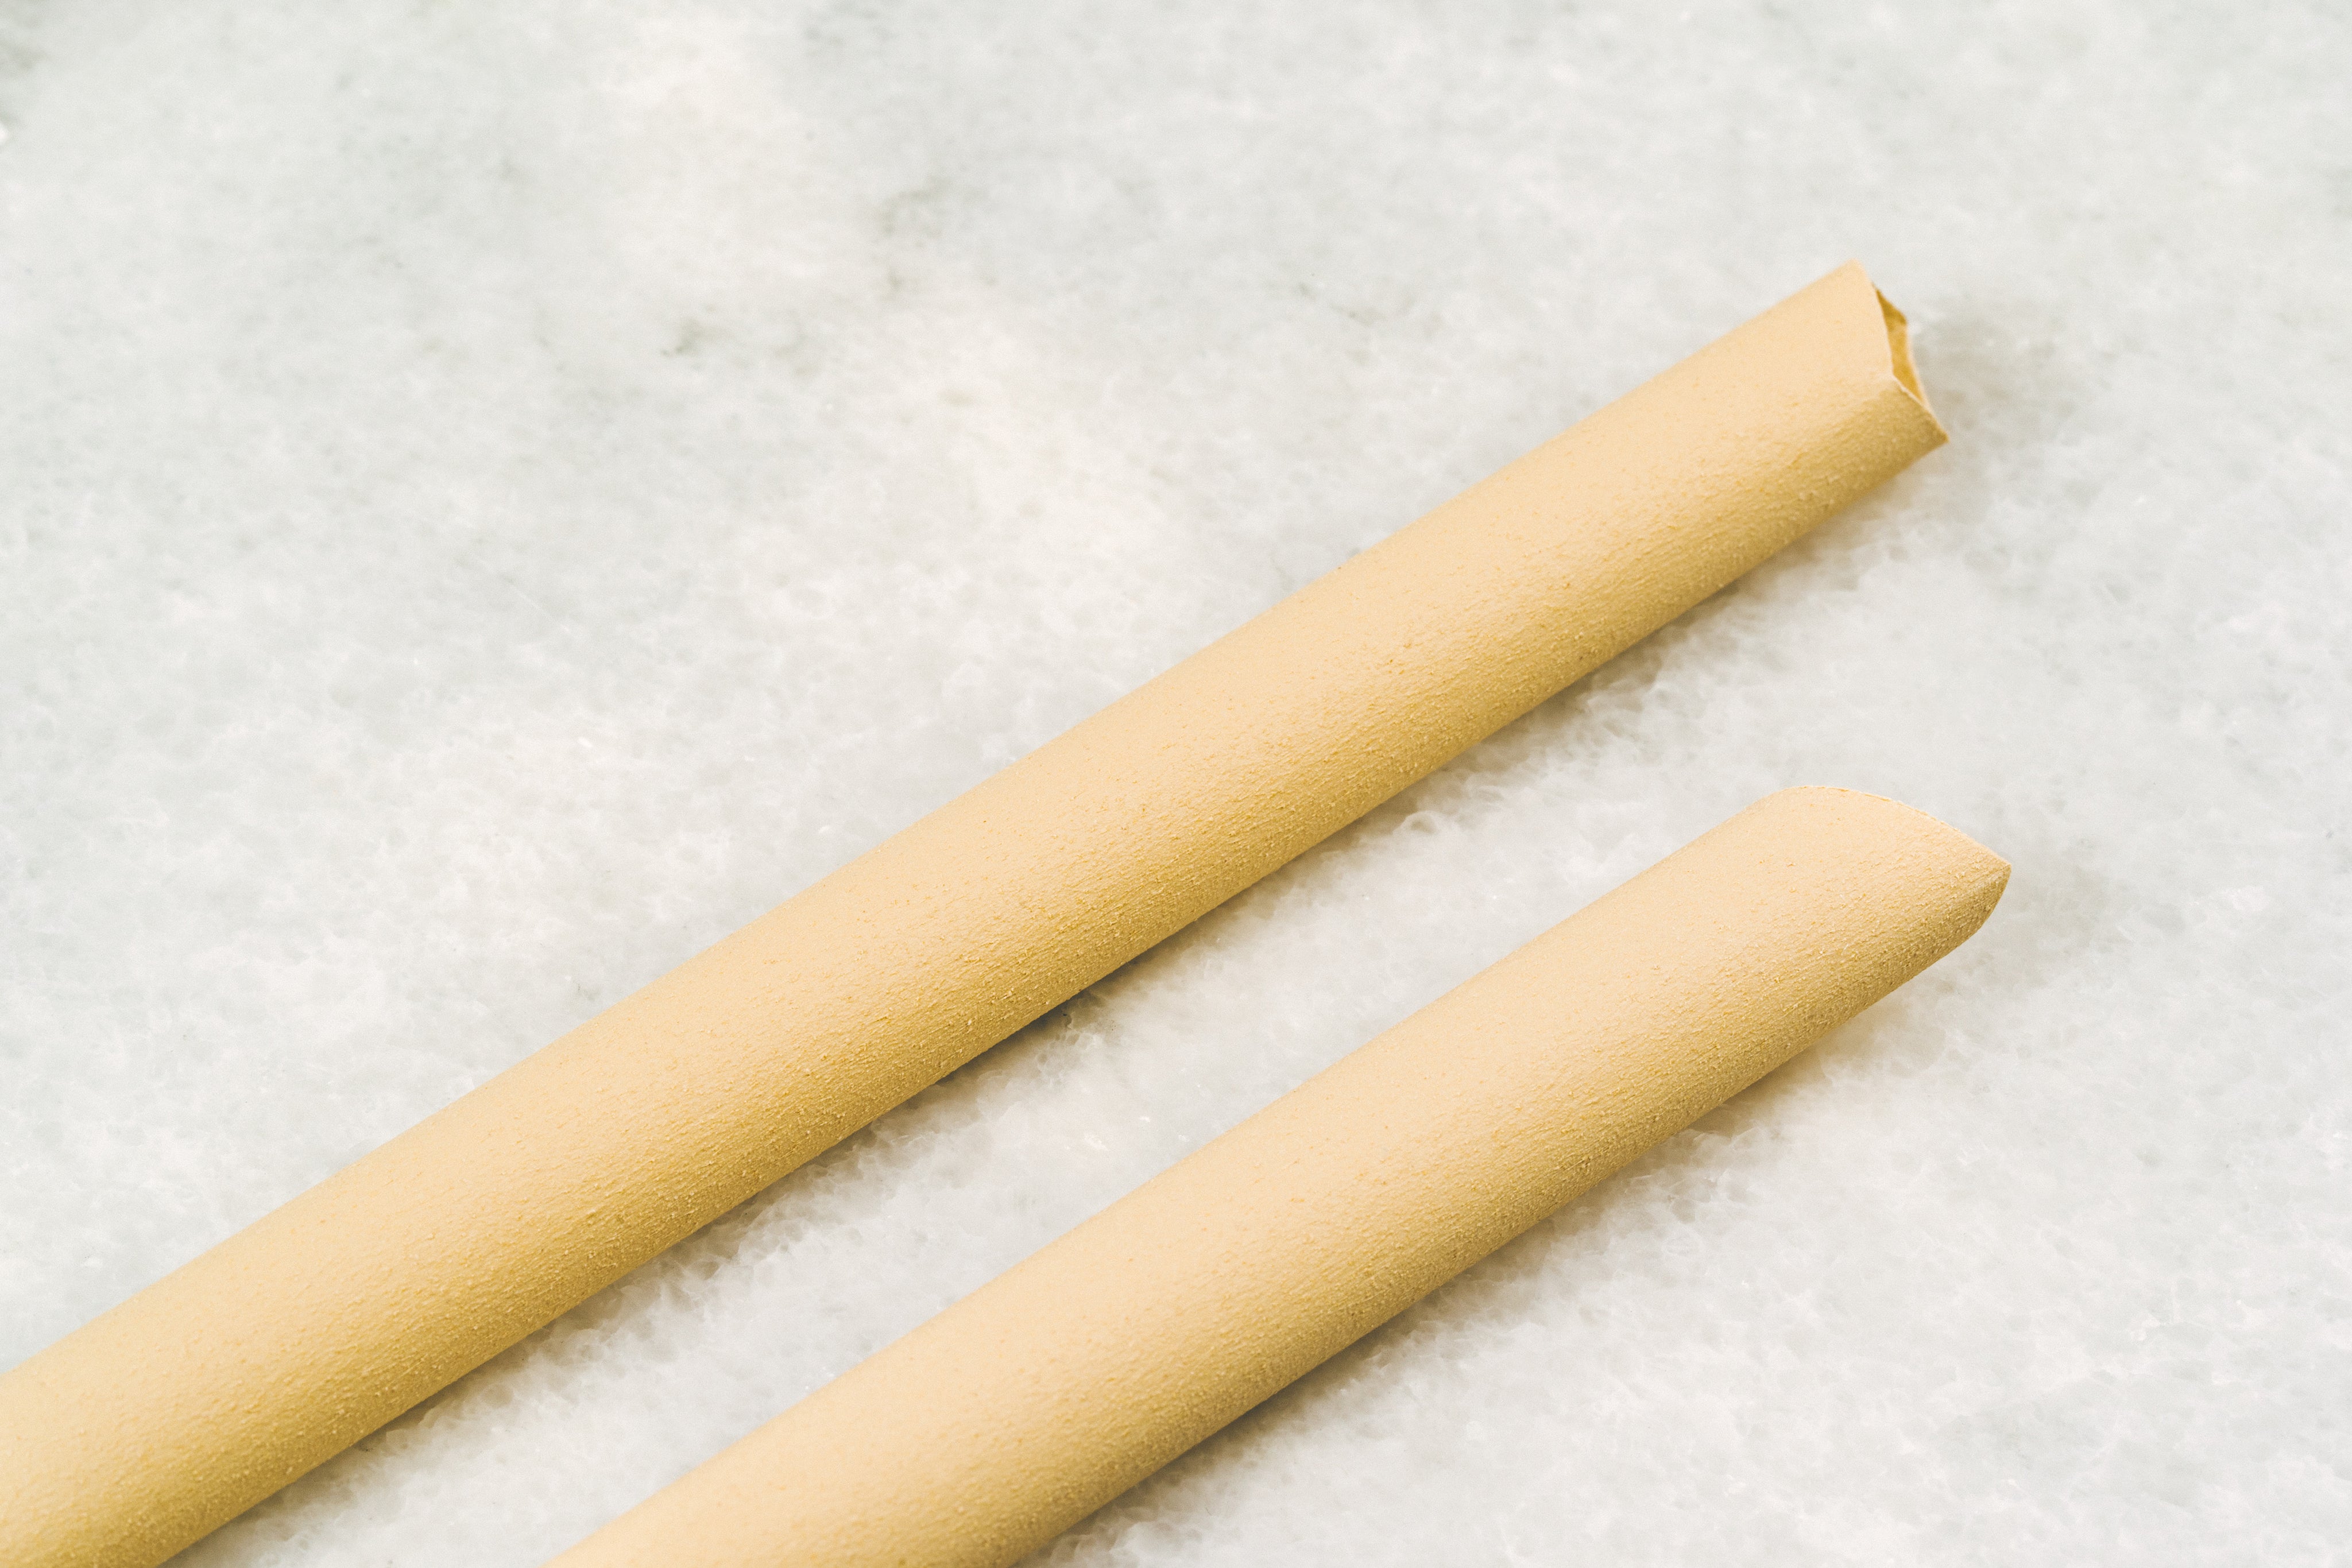 12mm Large Cropmade Bamboo Fiber Straw - CASE (2,000 pcs